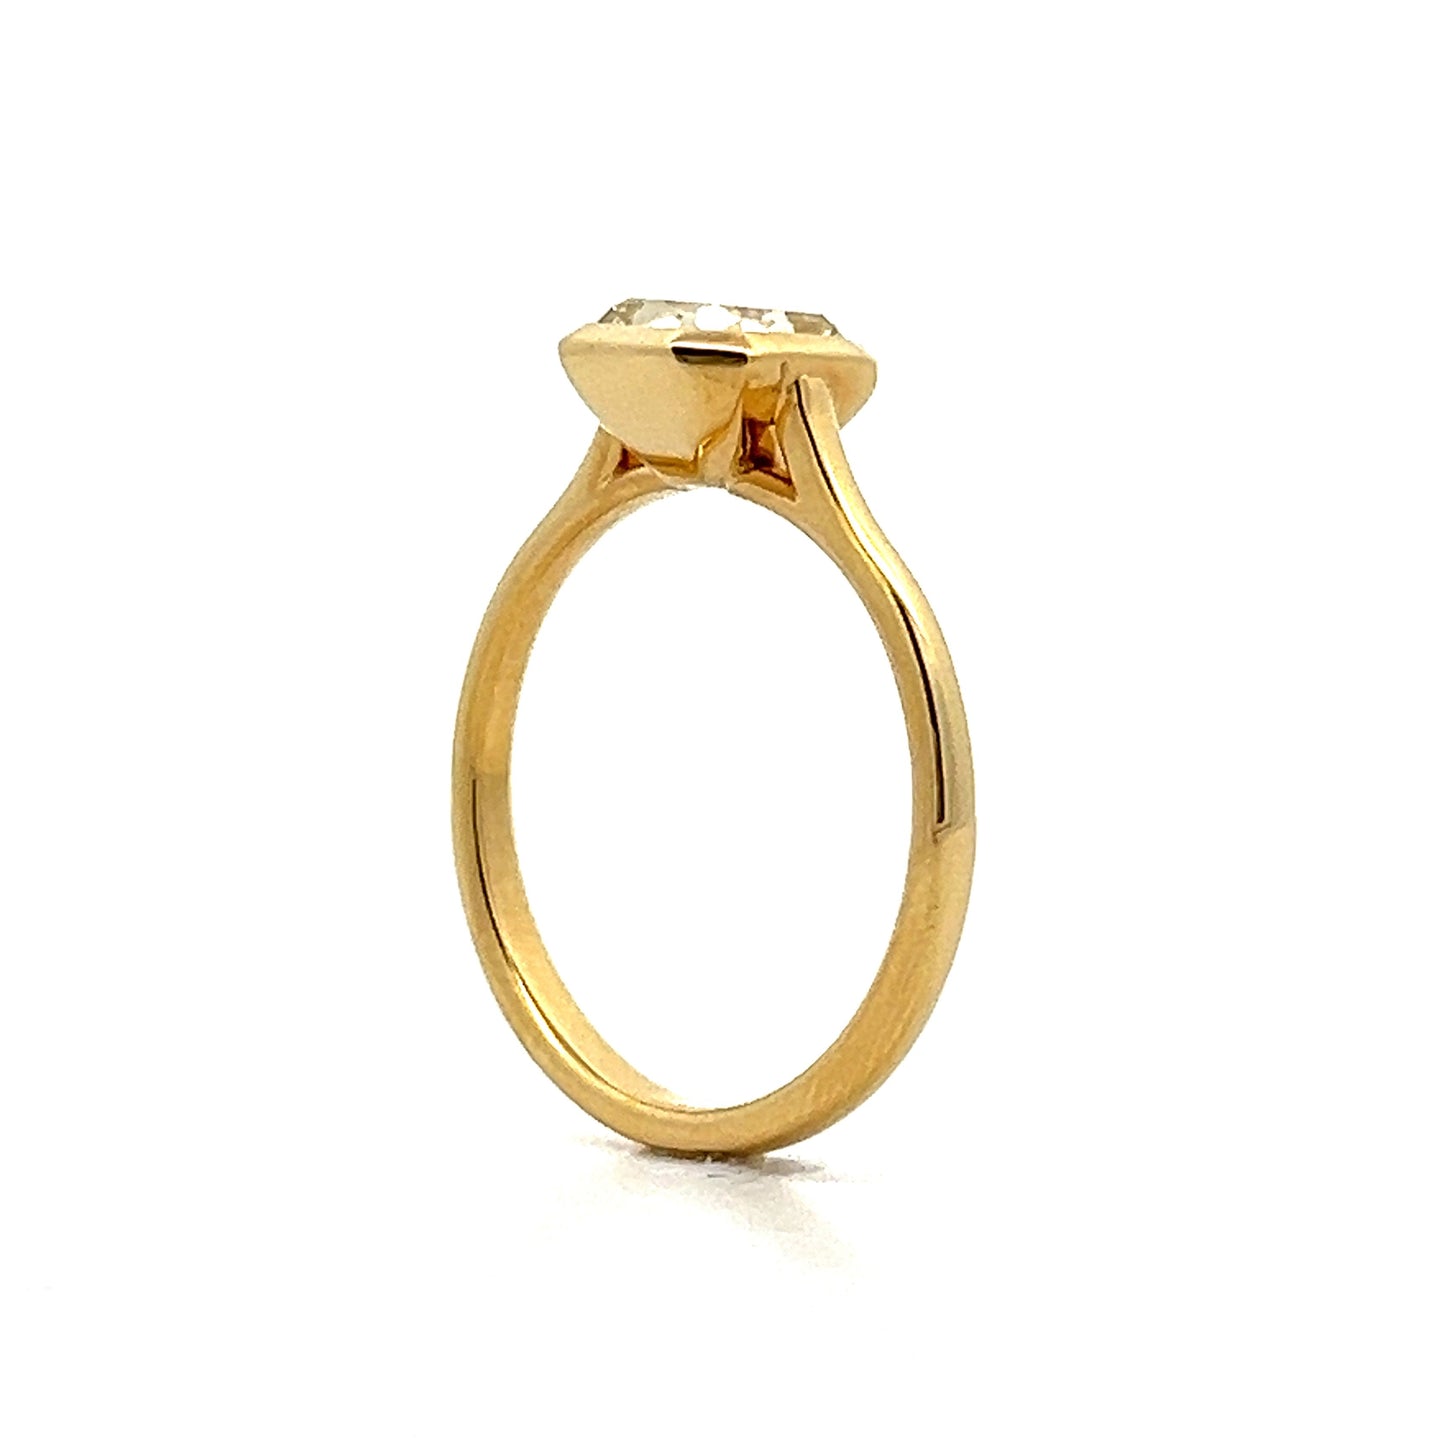 2.00 Carat Cushion Cut Diamond Engagement Ring in Yellow Gold